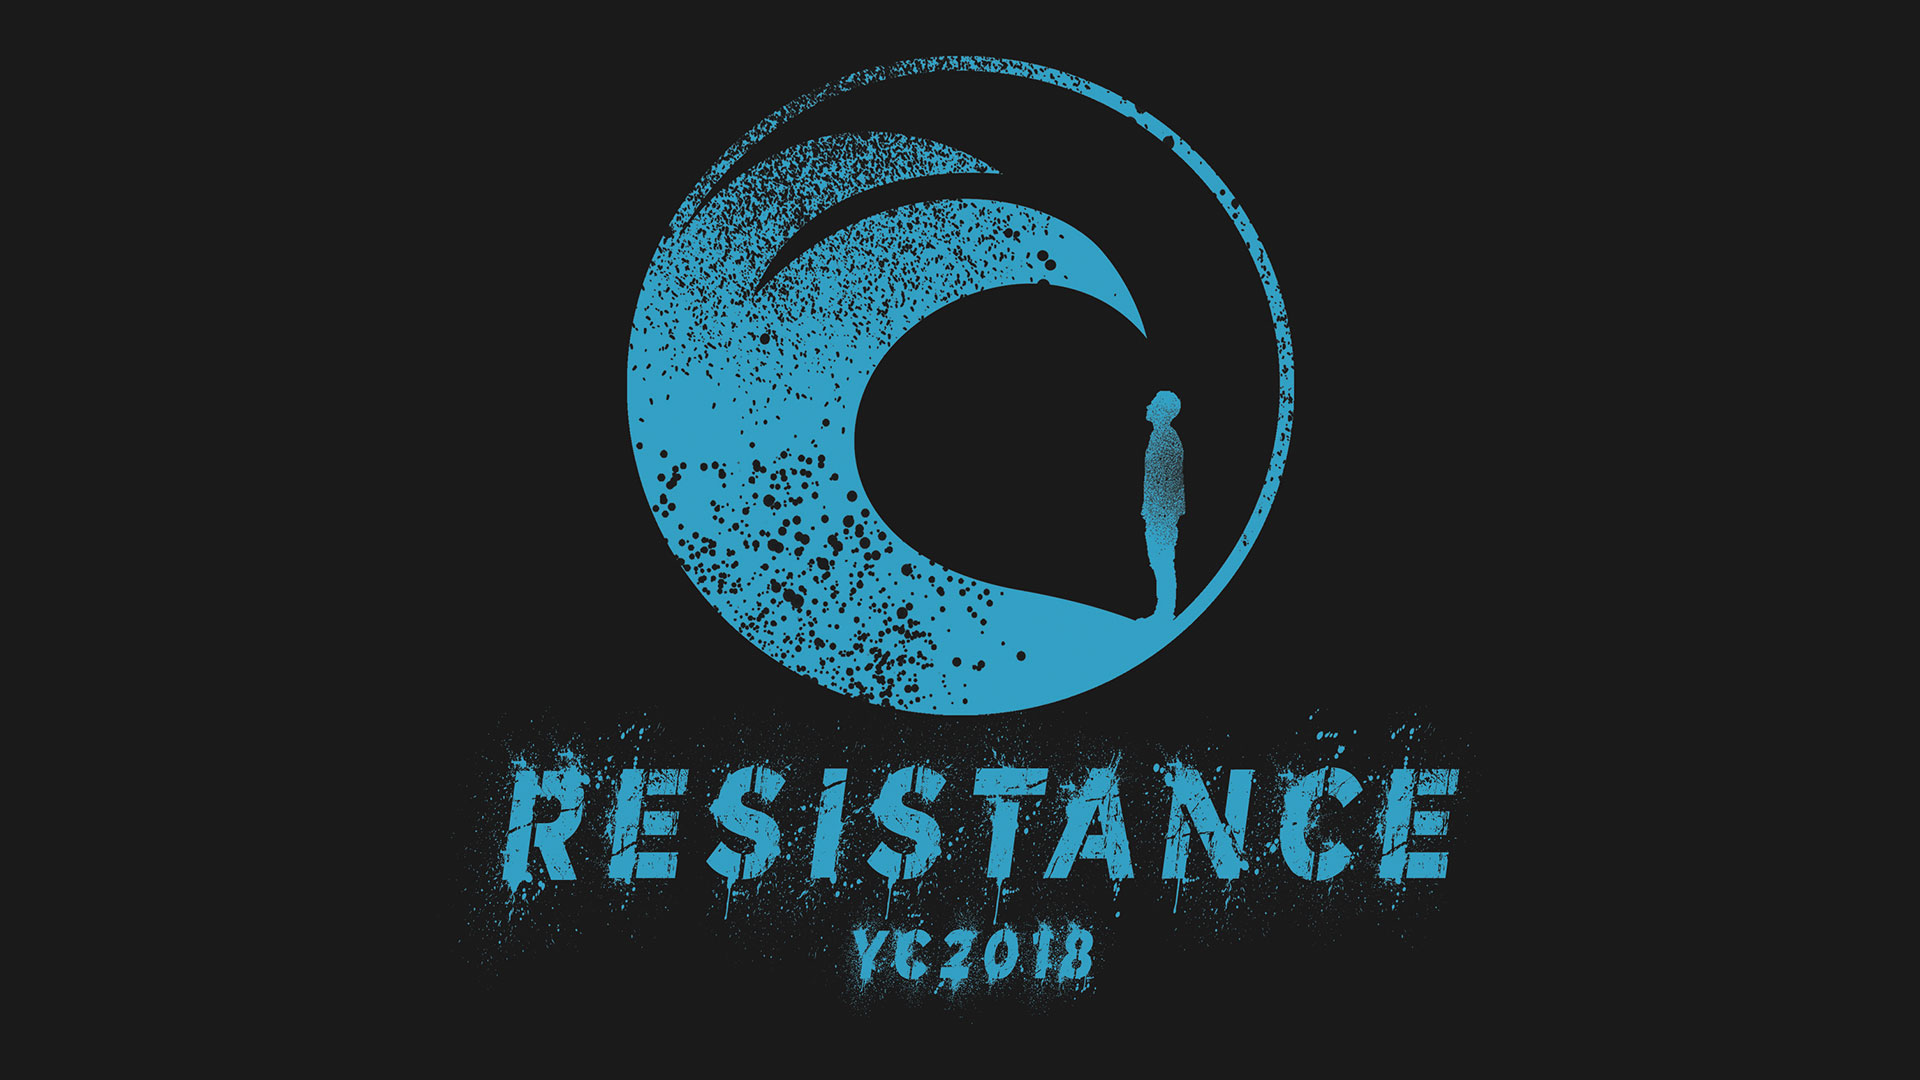 YC2018 - Resistance banner